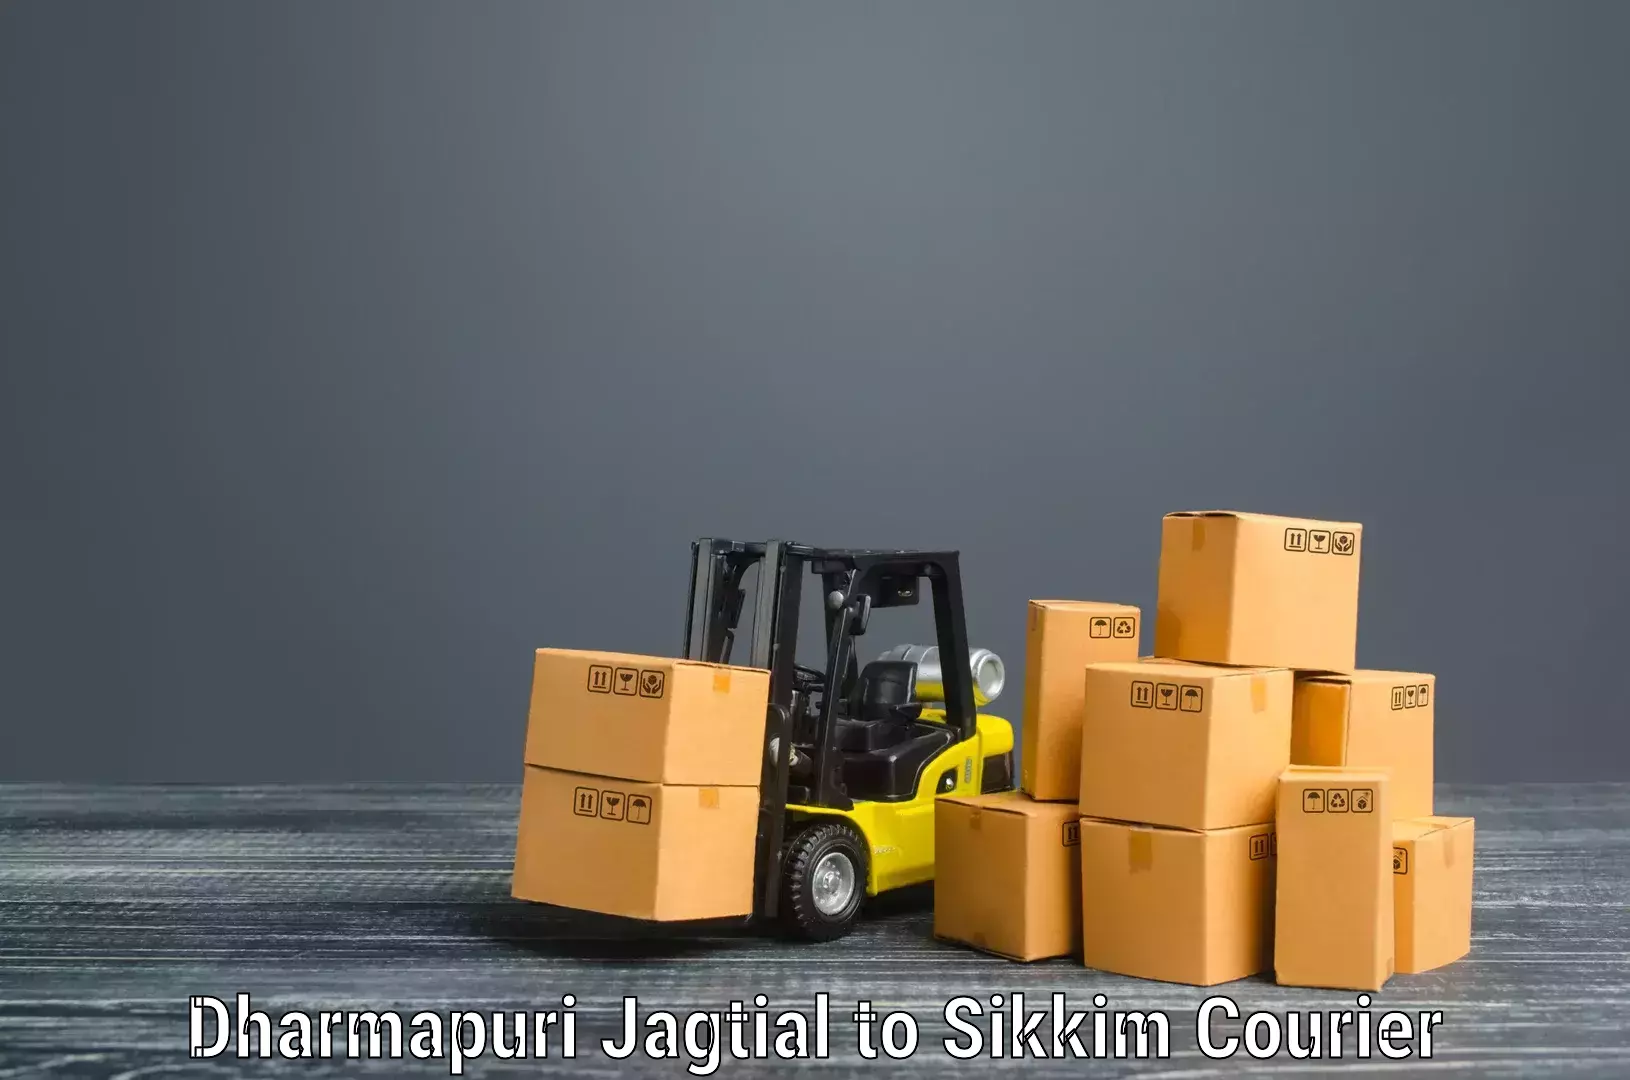 Professional moving company Dharmapuri Jagtial to East Sikkim